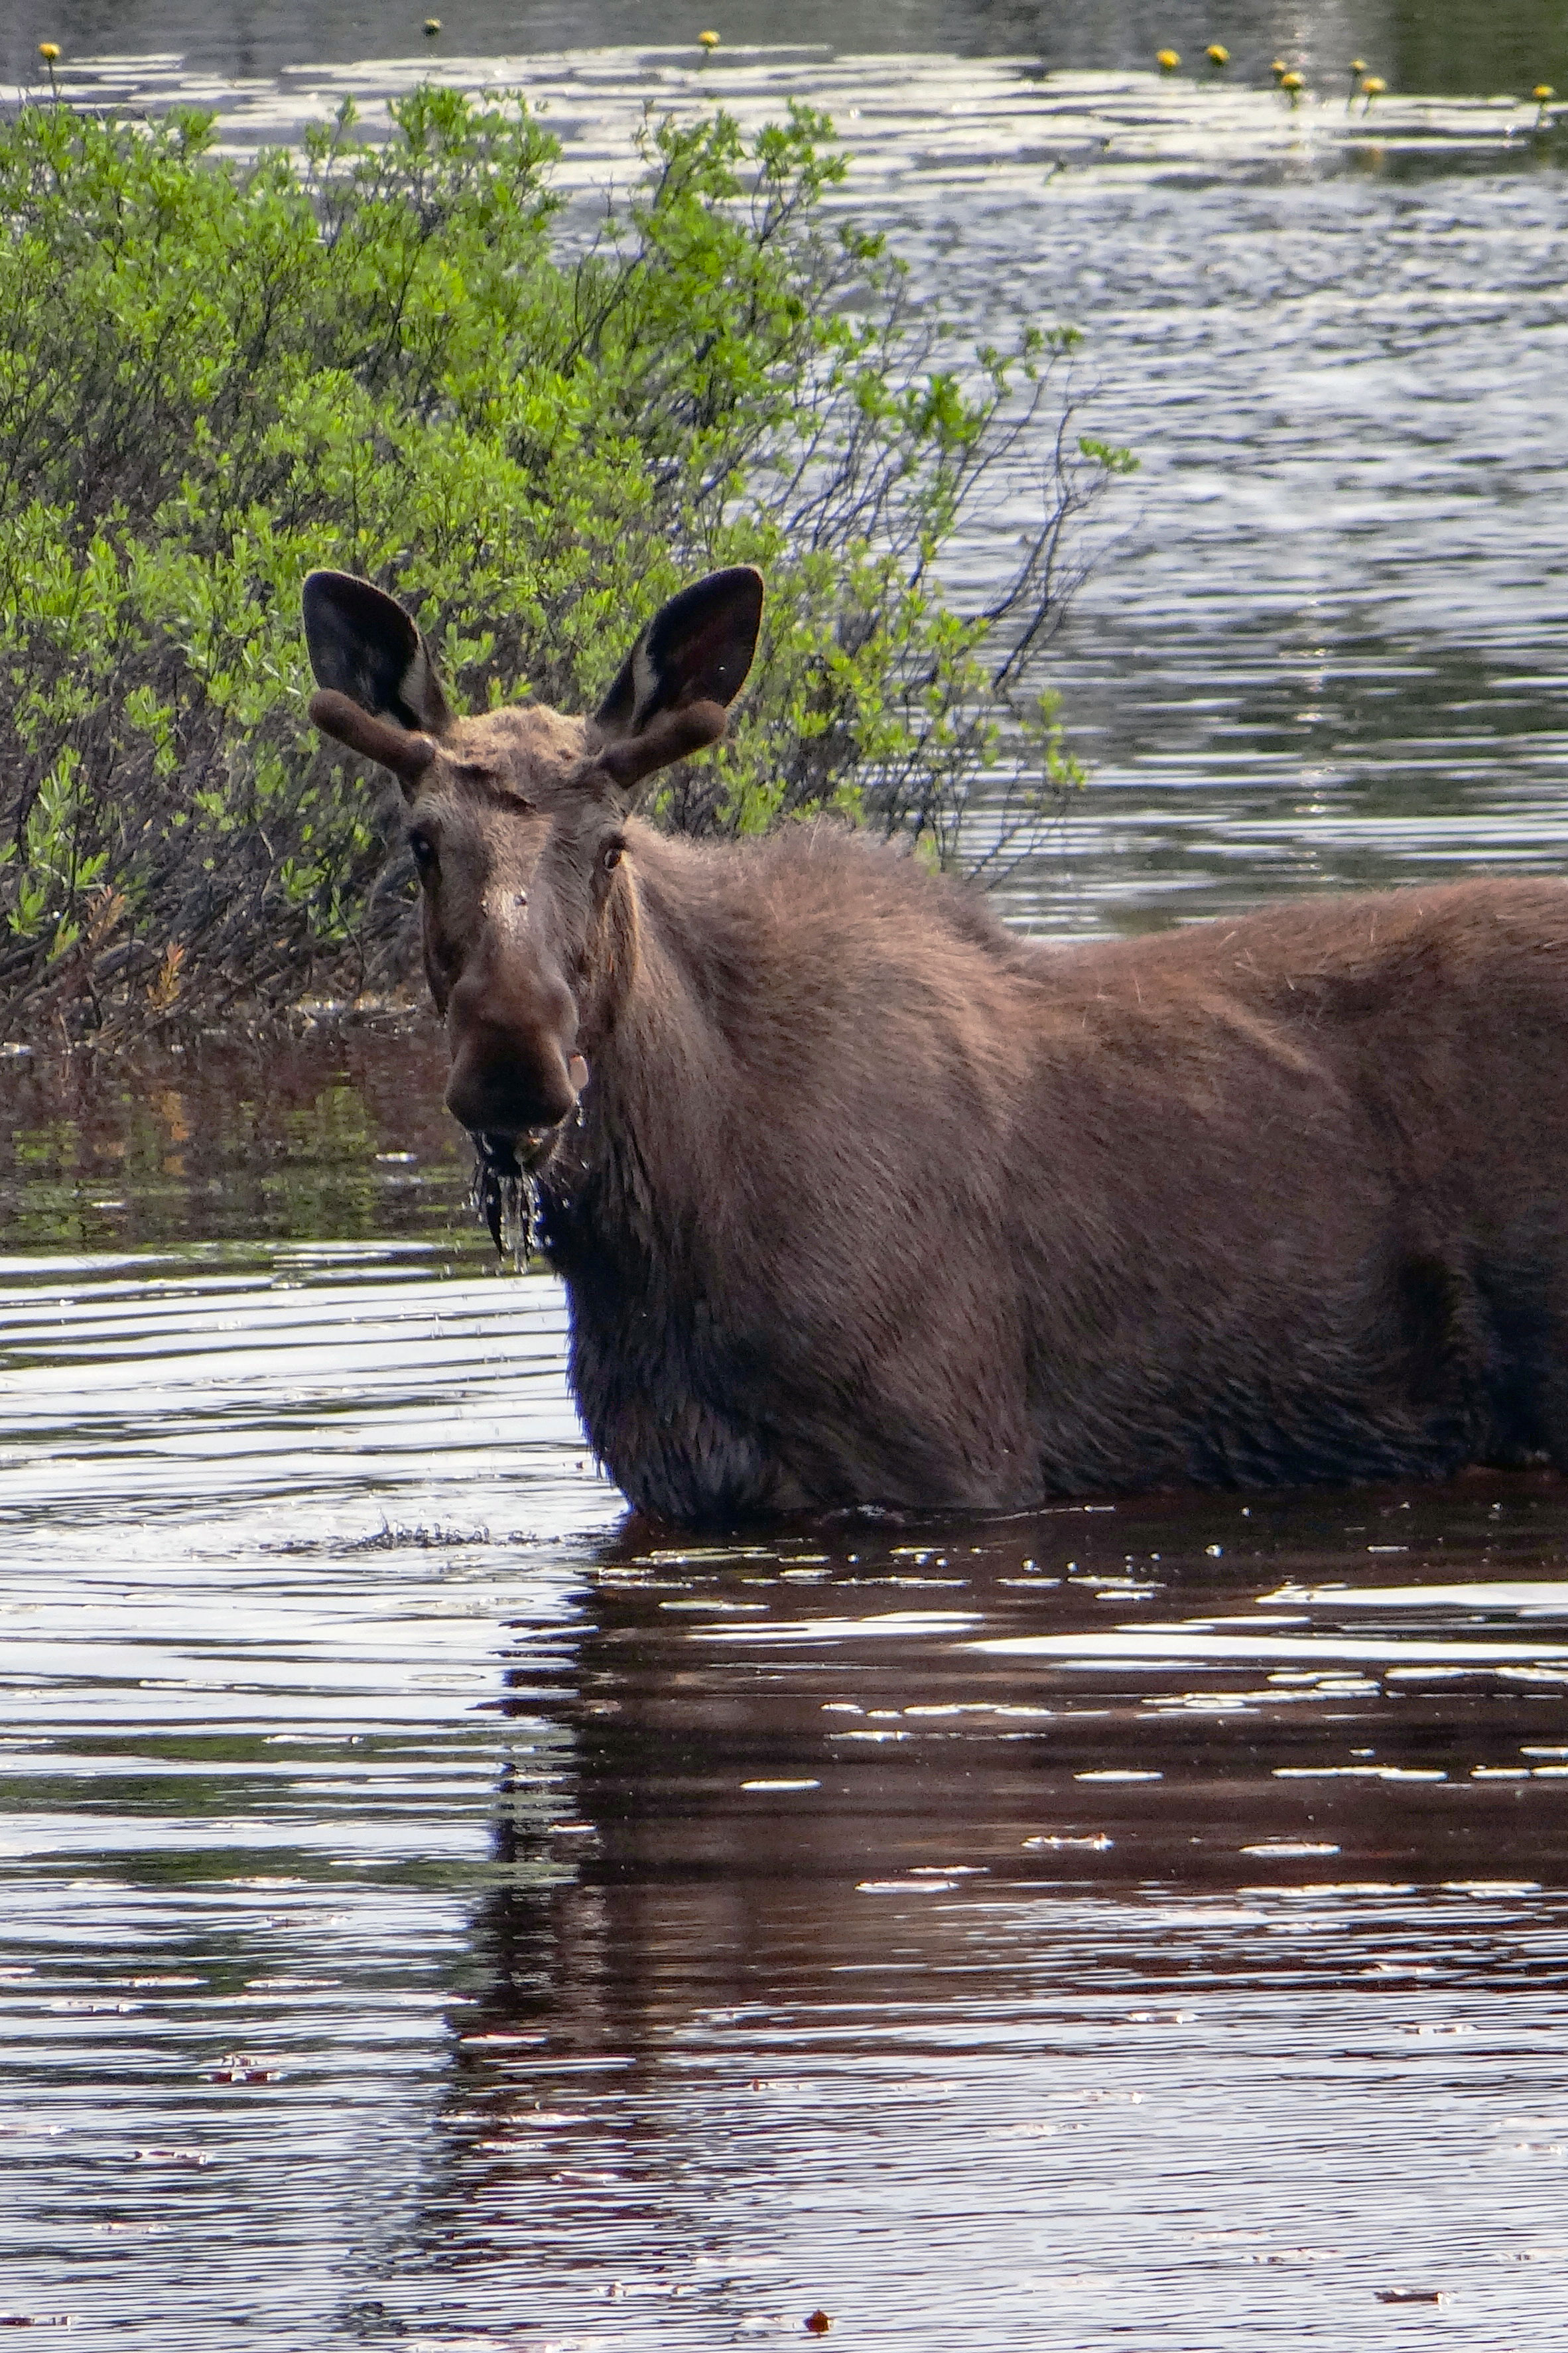 Juvenile Bull Moose photo credit Mary Wojcik